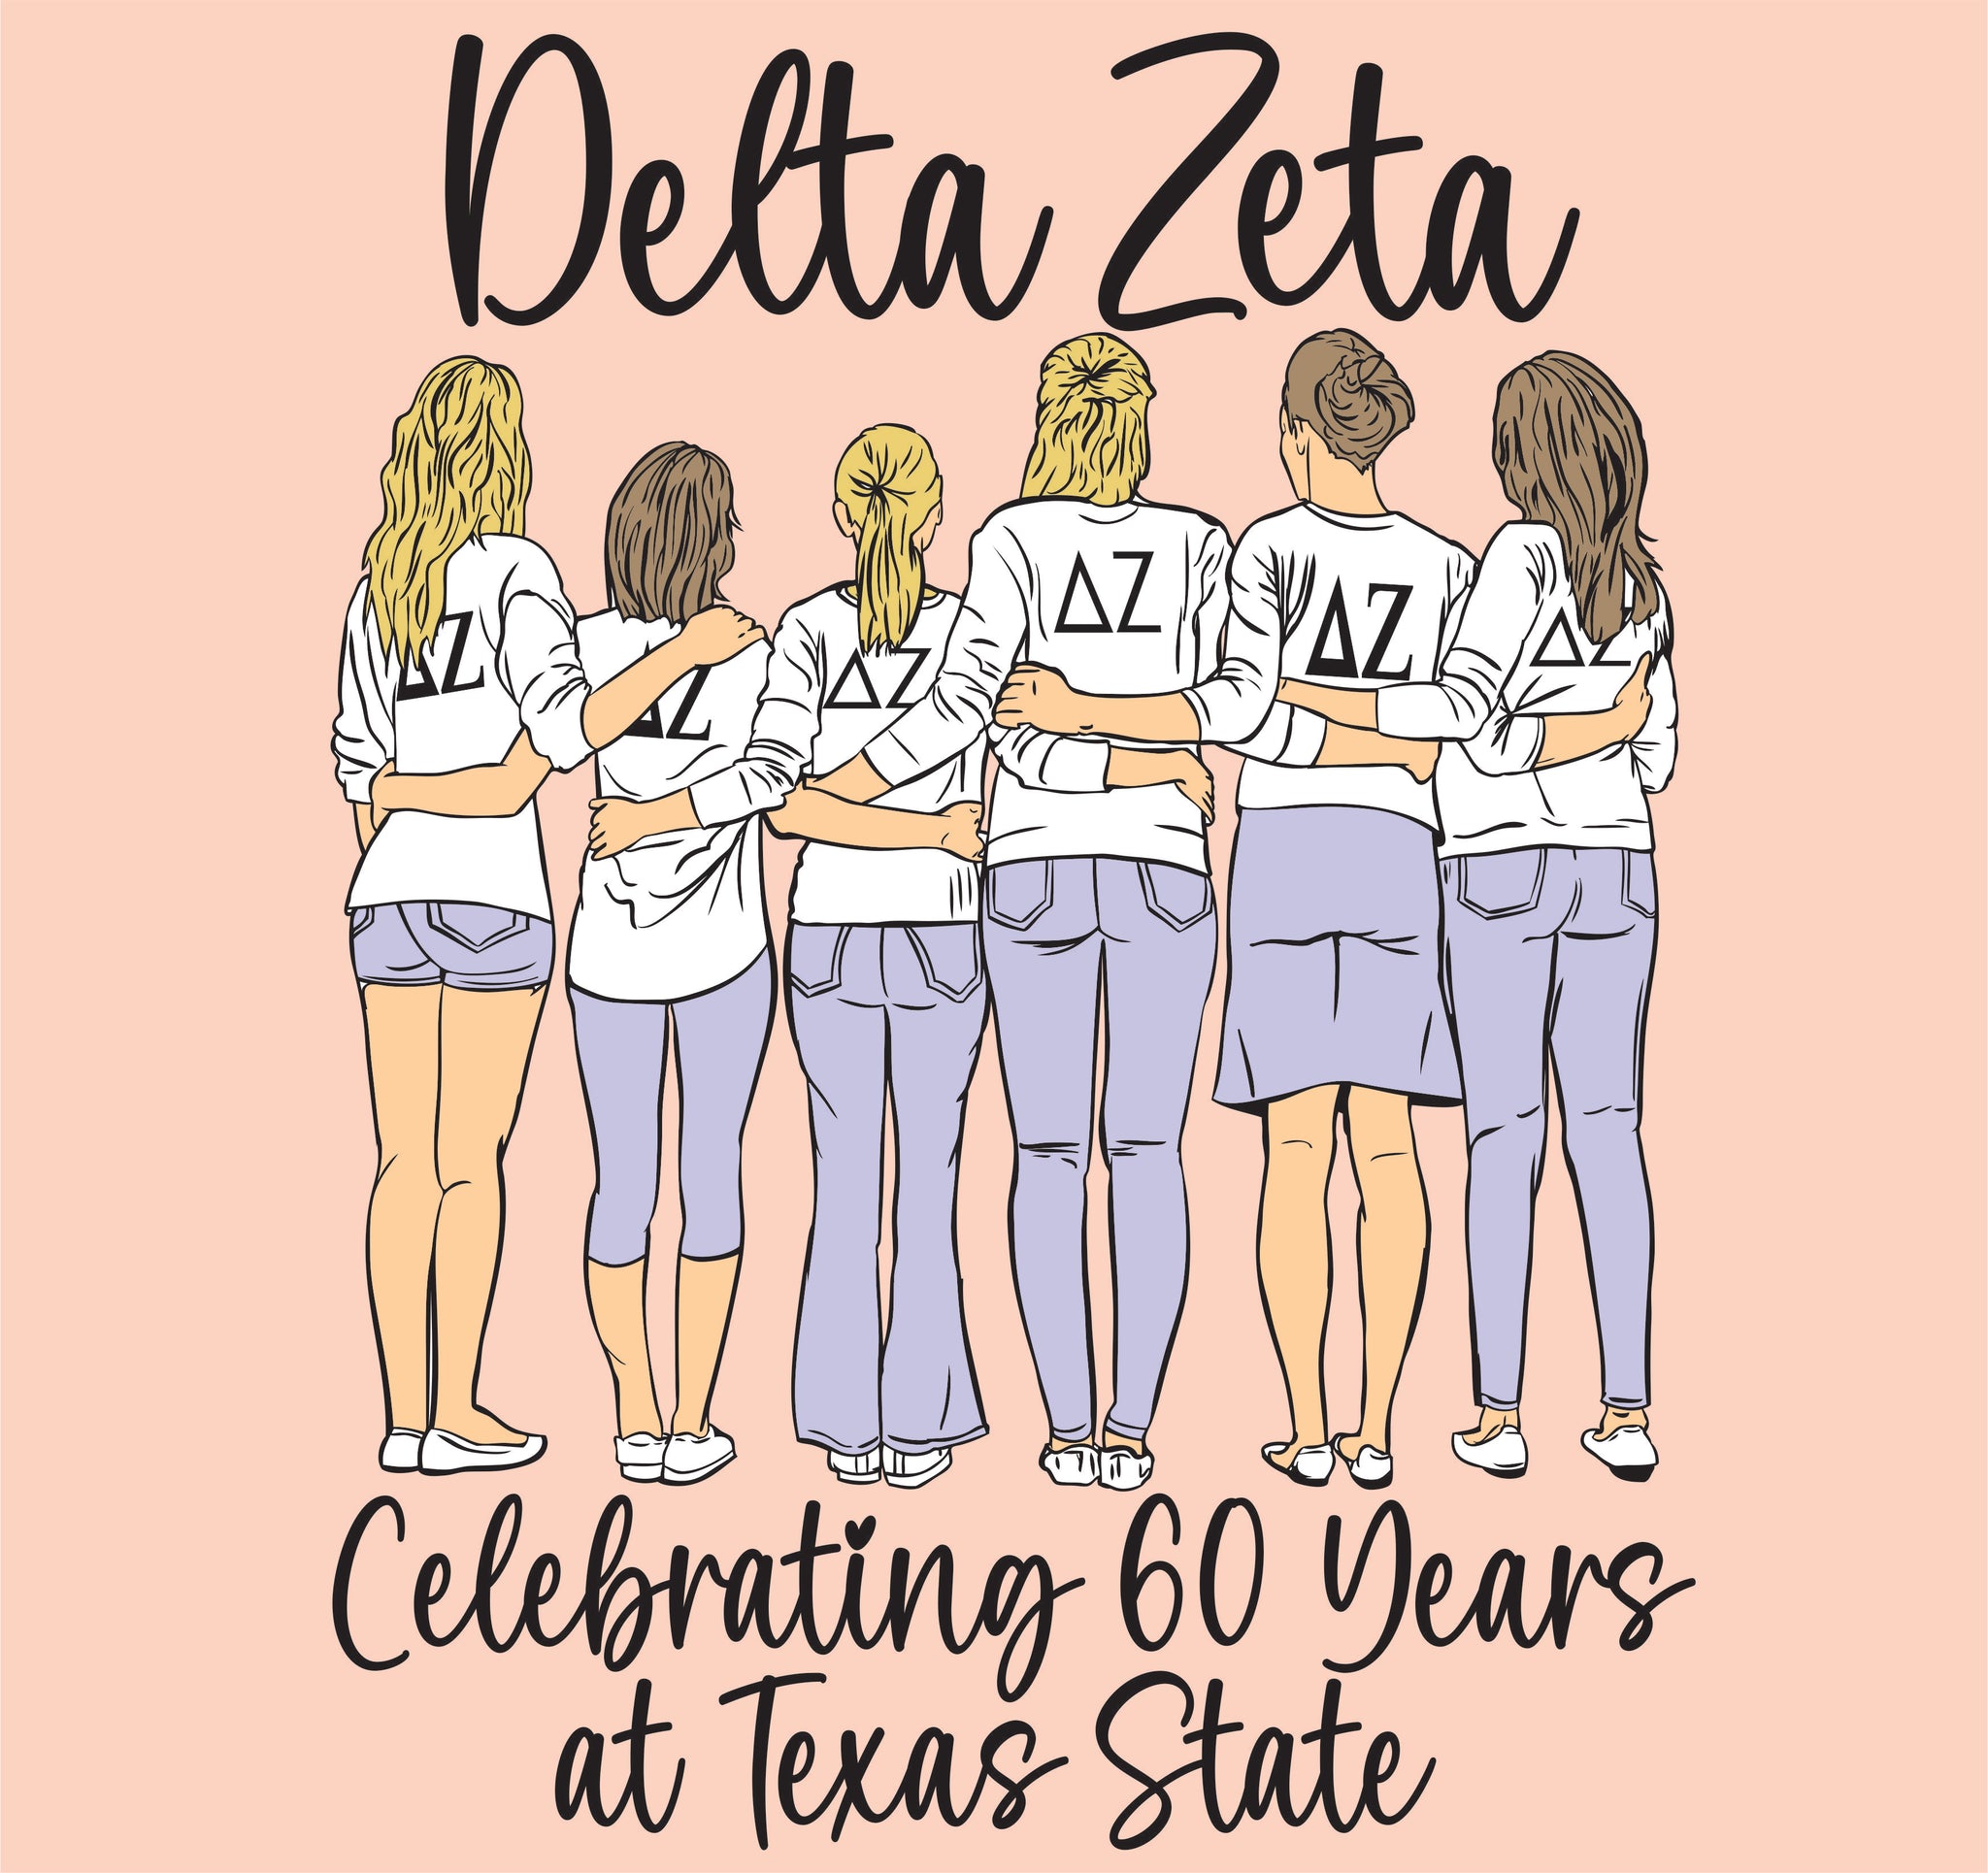 Delta Zeta TXST 60th Anniversary T-shirt